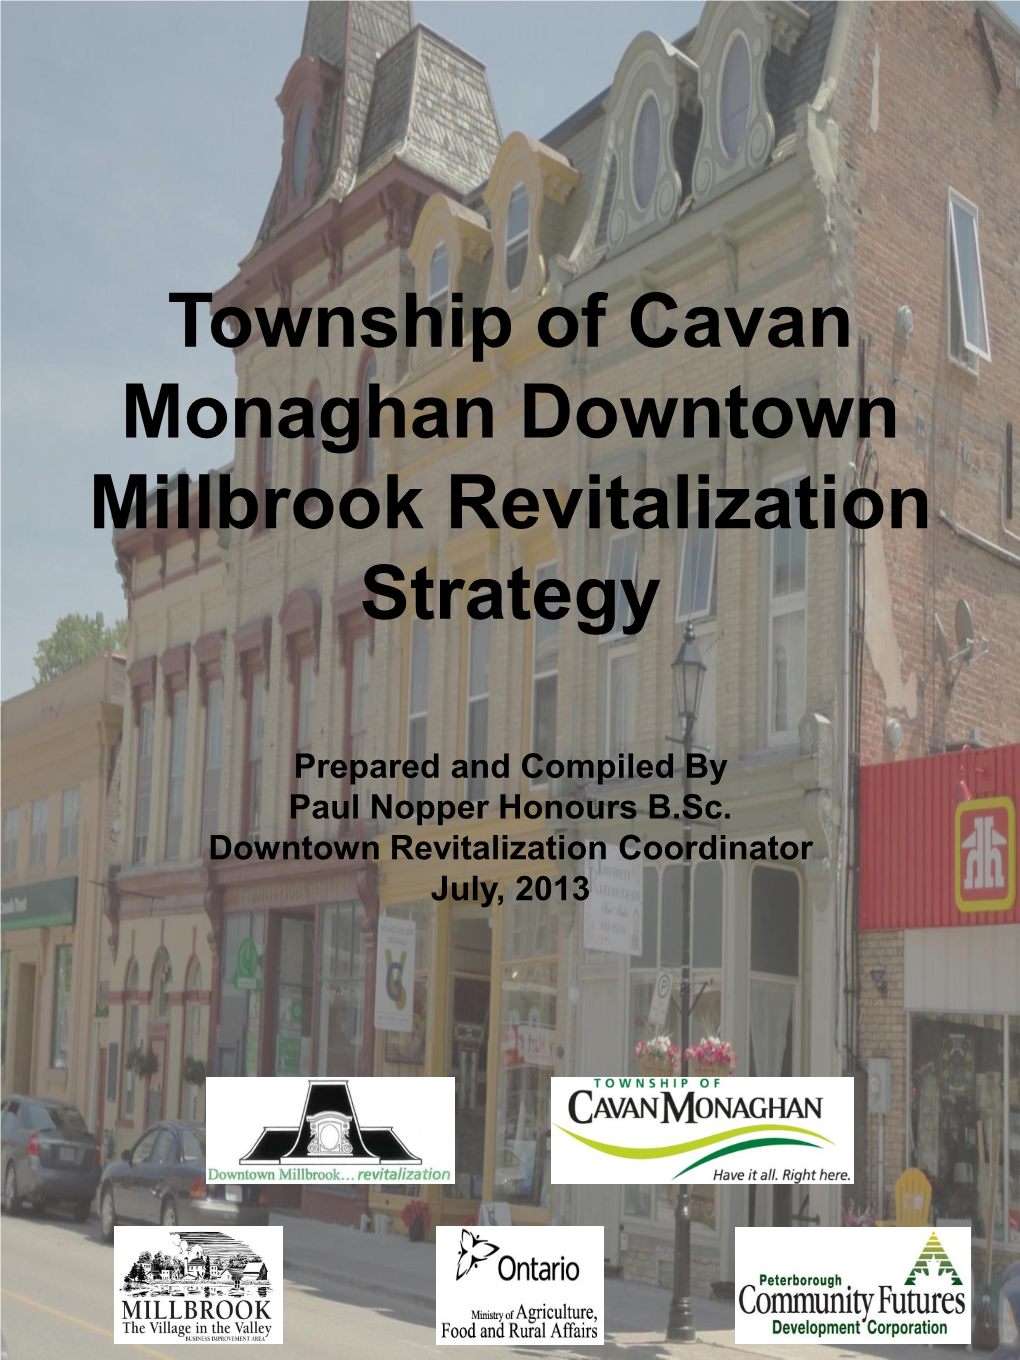 Downtown Millbrook Revitalization Strategy